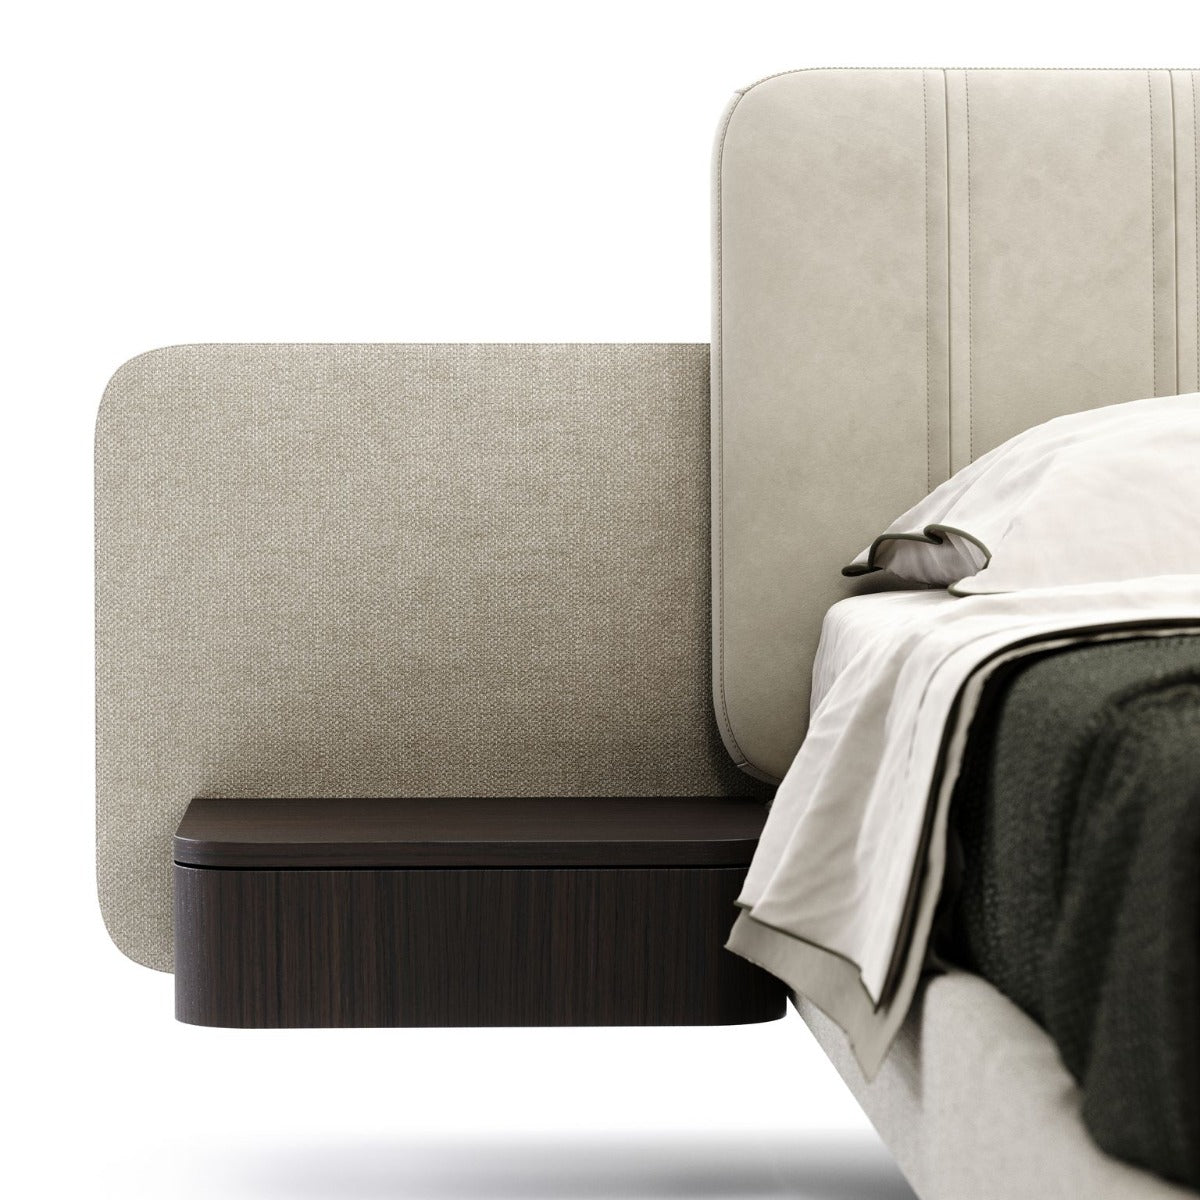 Domkapa Amanda Kingsize Bed - Customisable | Modern Furniture + Decor